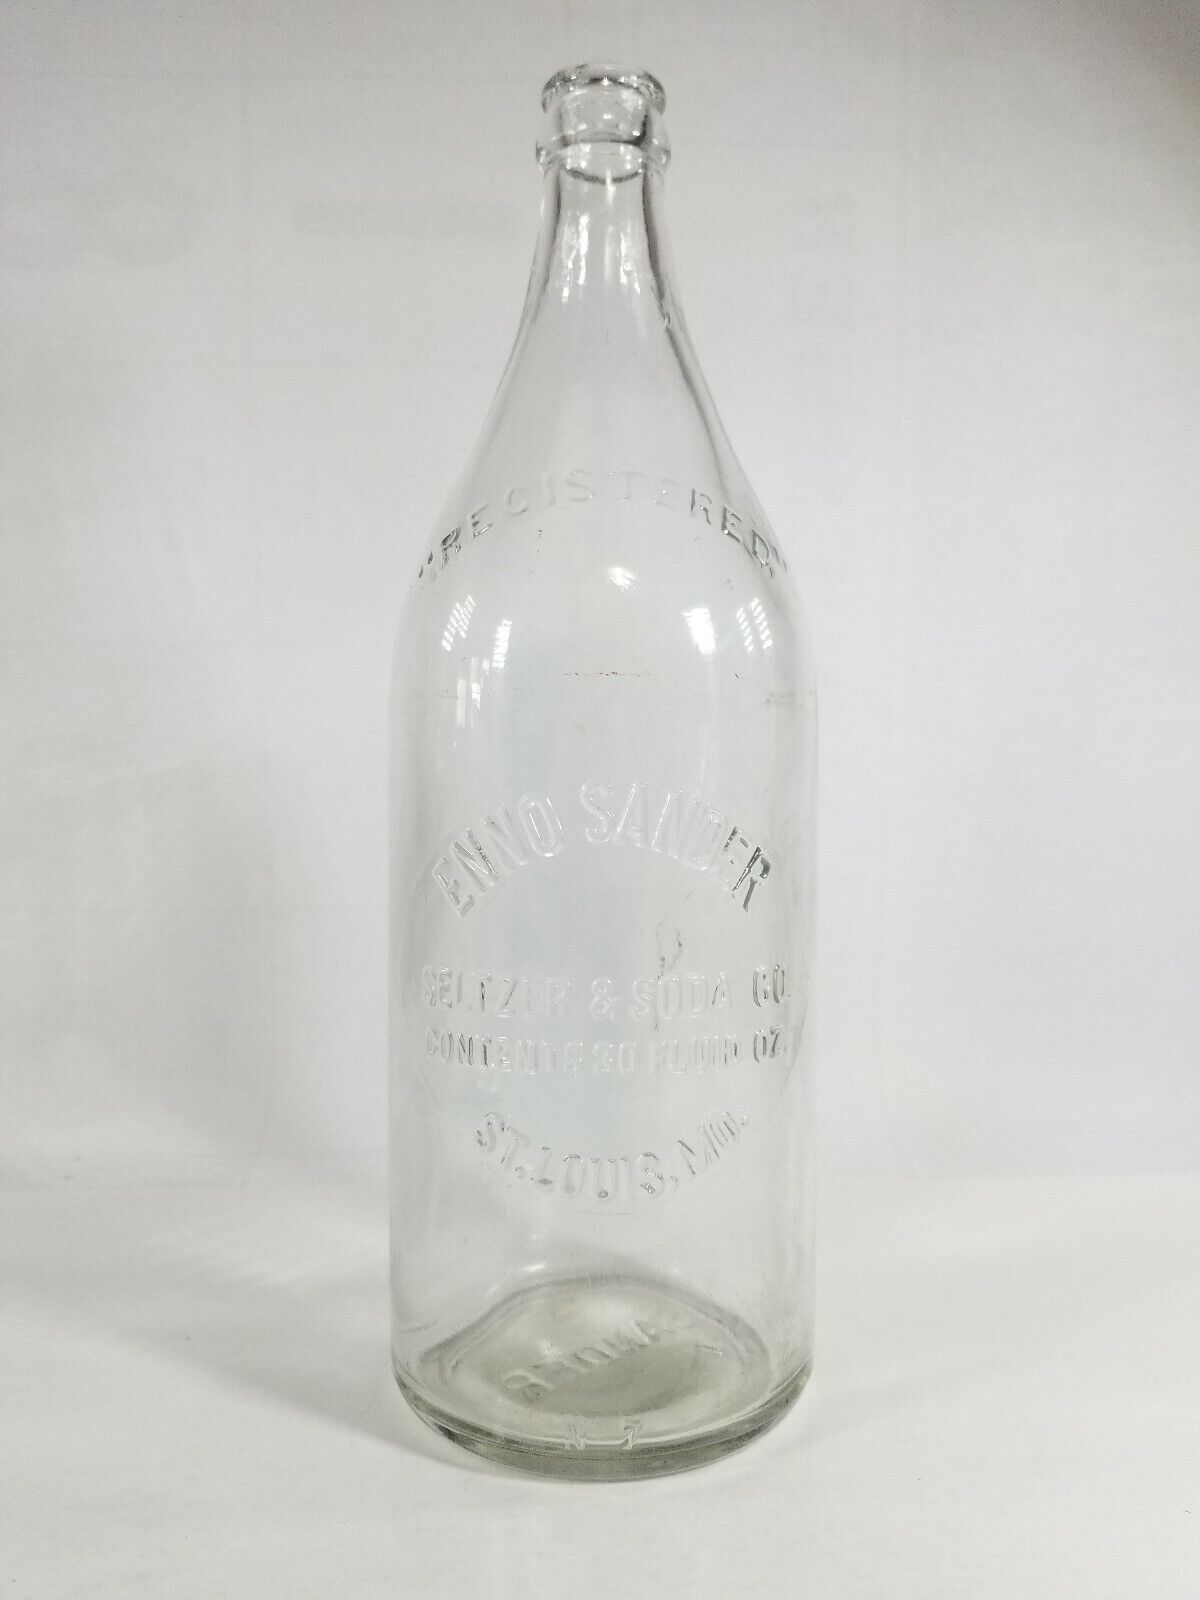 Vintage Enno Sander Soda Bottle Seltzer & Soda Co. St Louis Missouri